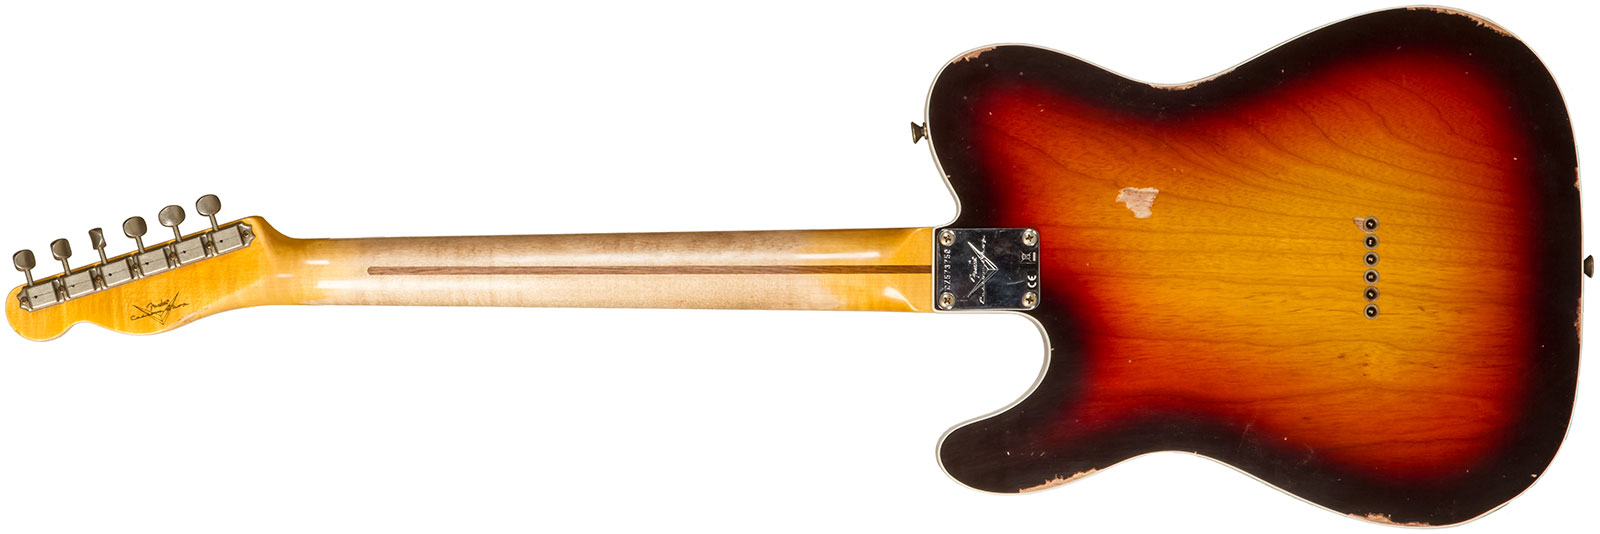 Fender Custom Shop Tele Custom 1959 2s Ht Mn #cz573750 - Relic Chocolate 3-color Sunburst - Televorm elektrische gitaar - Variation 1